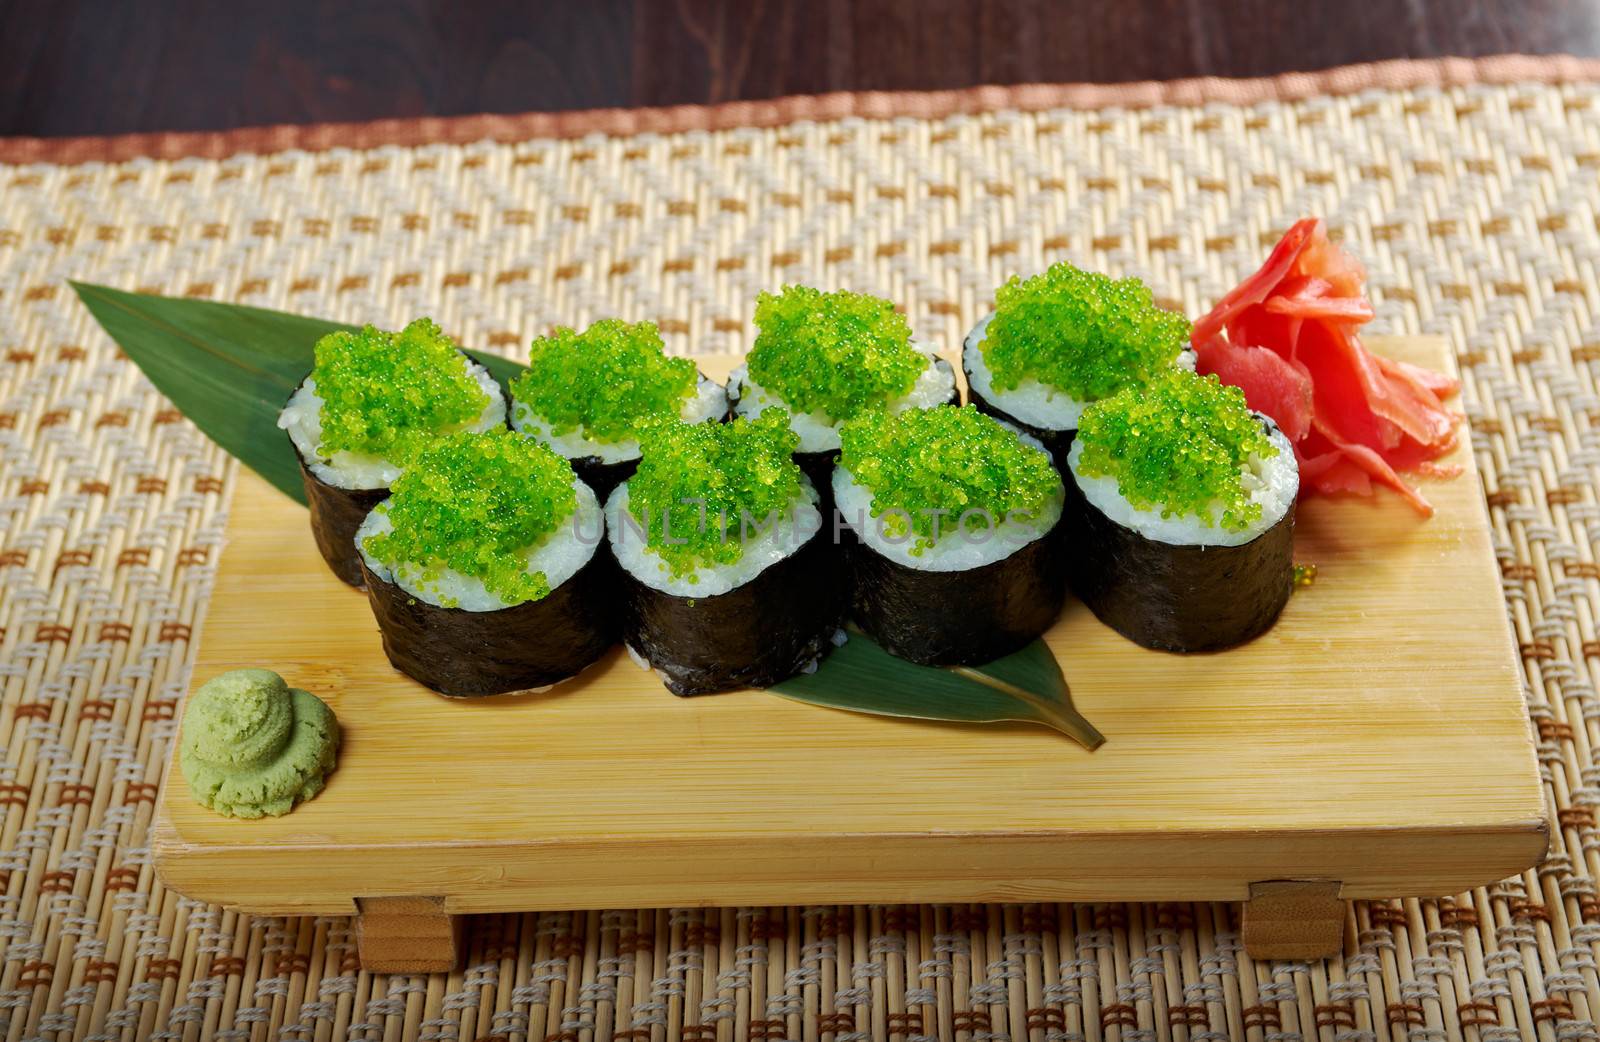 Tobiko (flying fish roe) Gunkan Maki Sushi.Roll made of Smoked fish